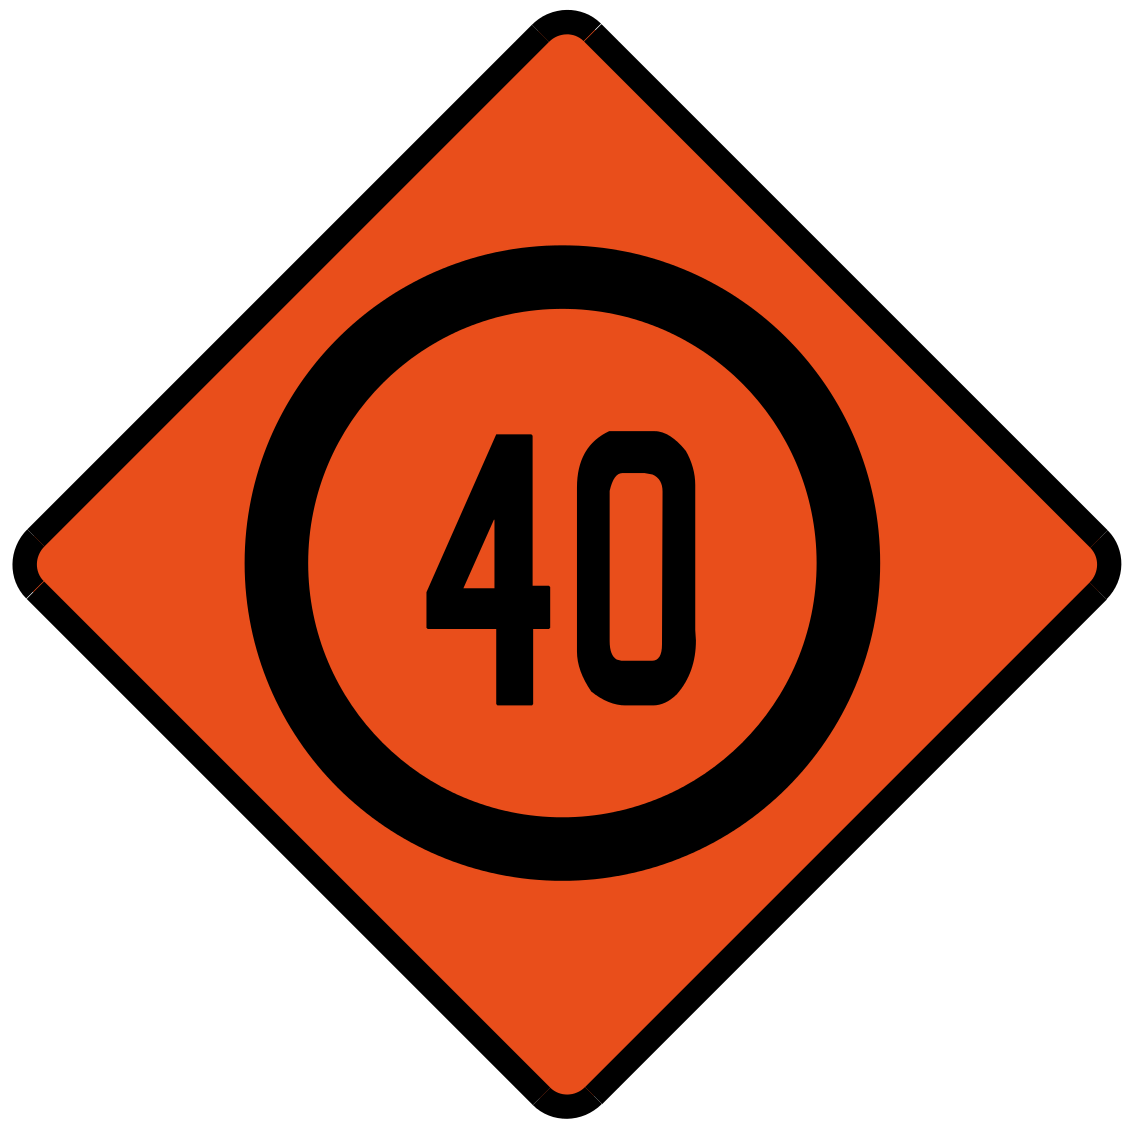 Temporary mandatory speed limit (40km per hour)